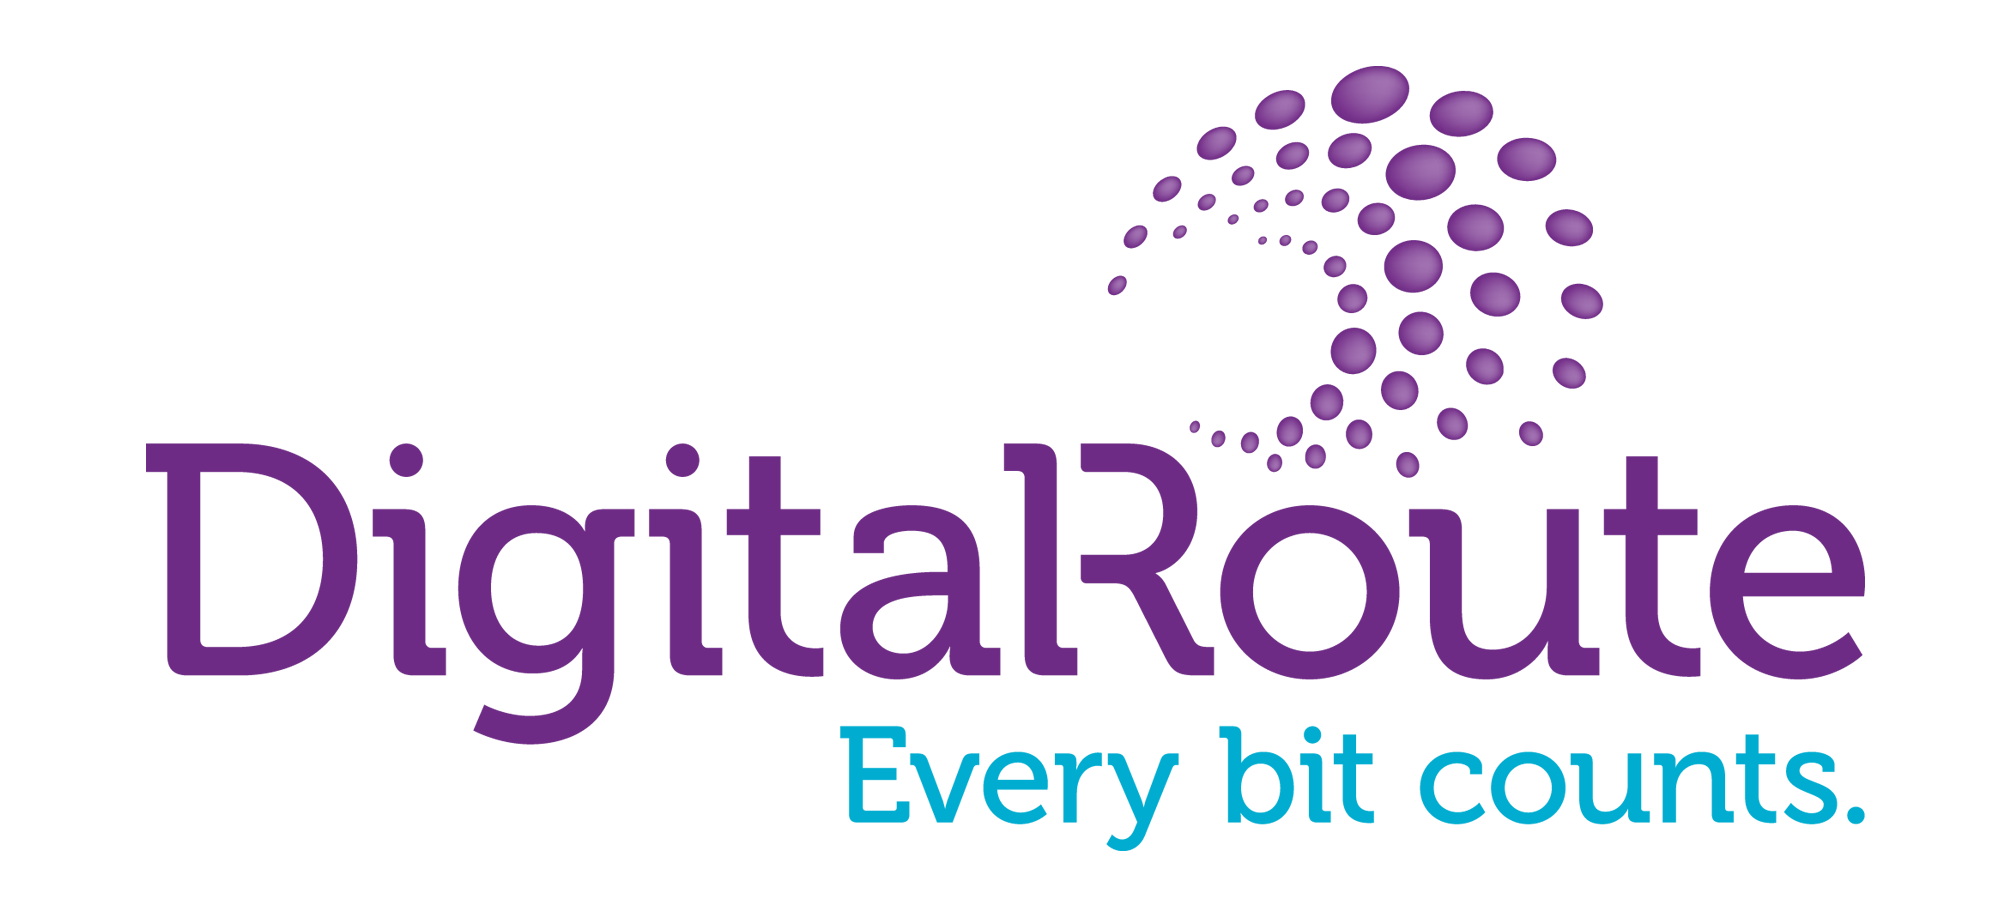 DigitalRoute expande